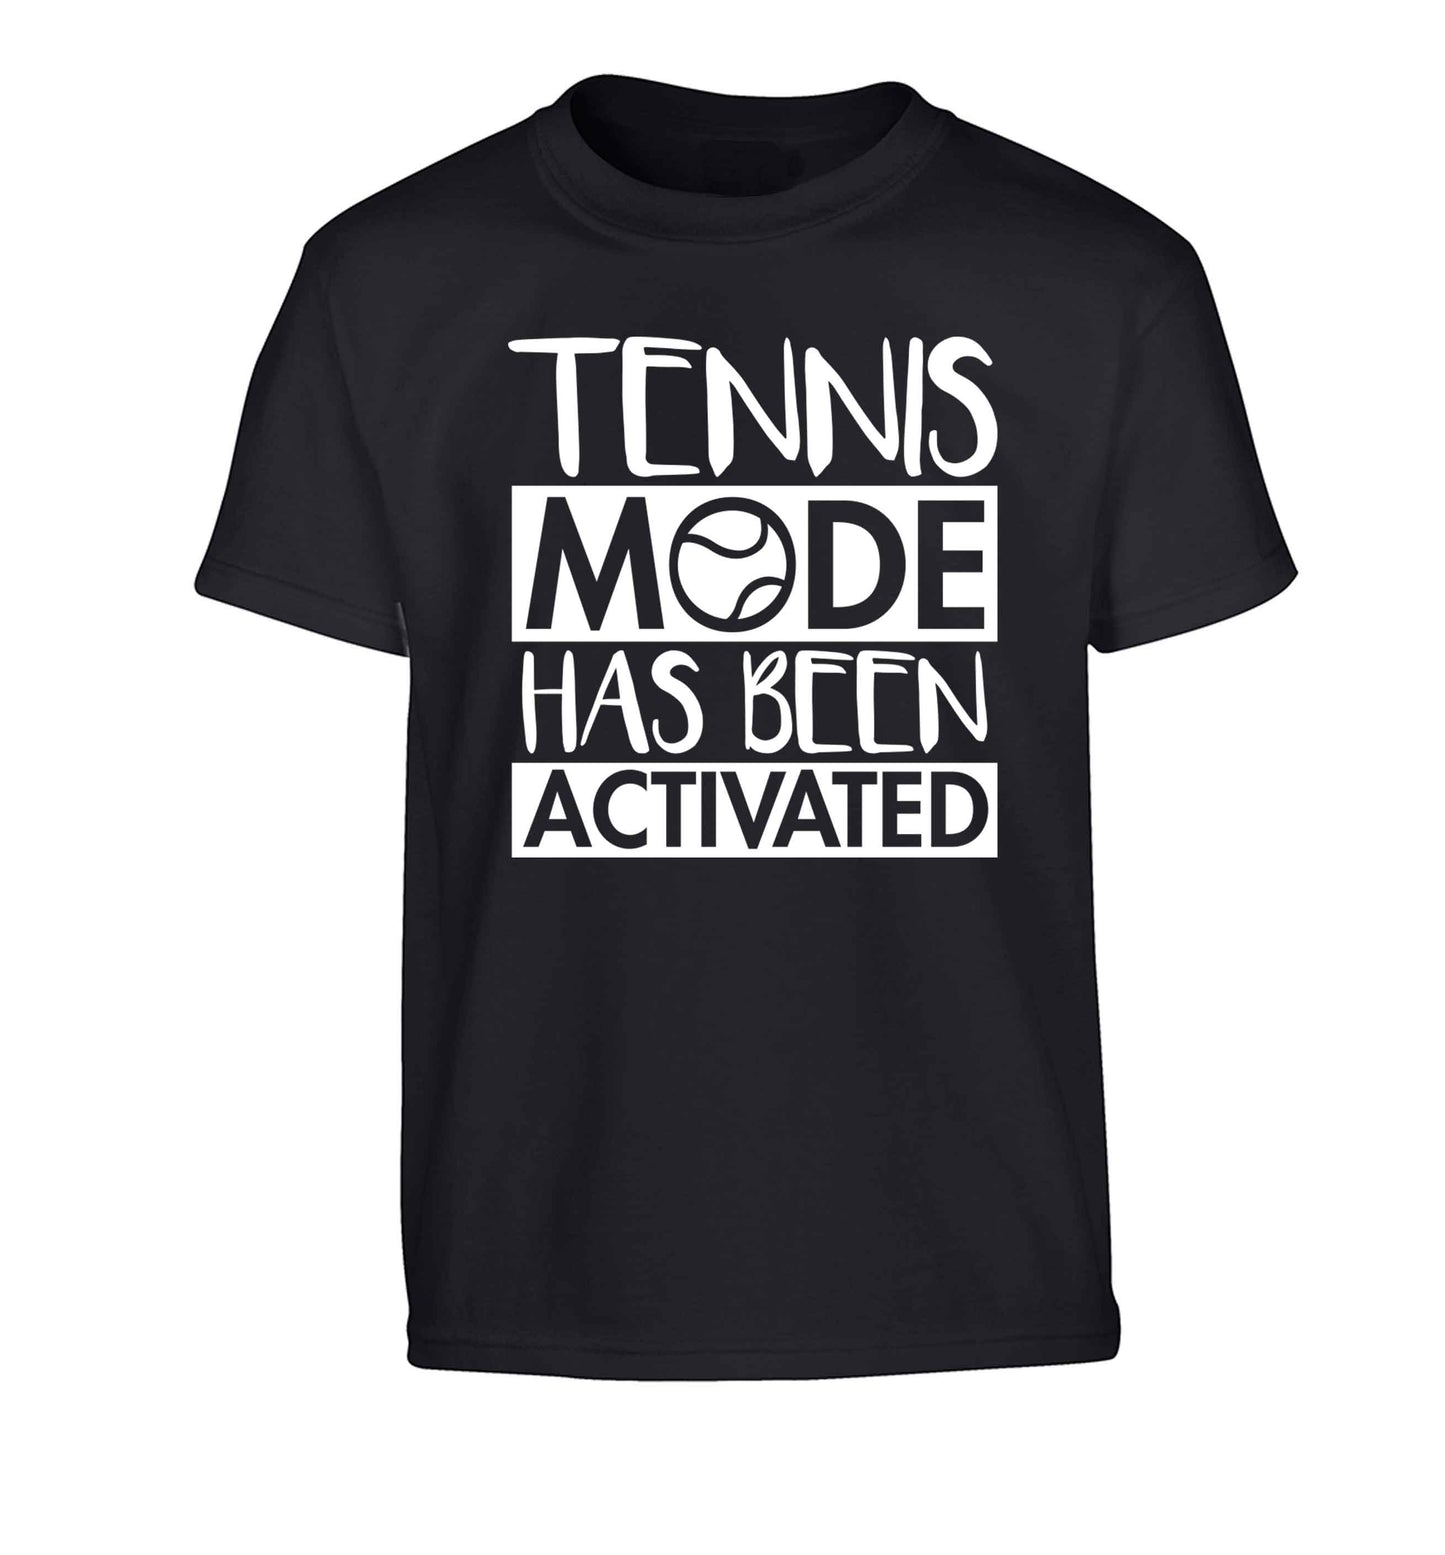 Tennis mode has been activated Children's black Tshirt 12-13 Years